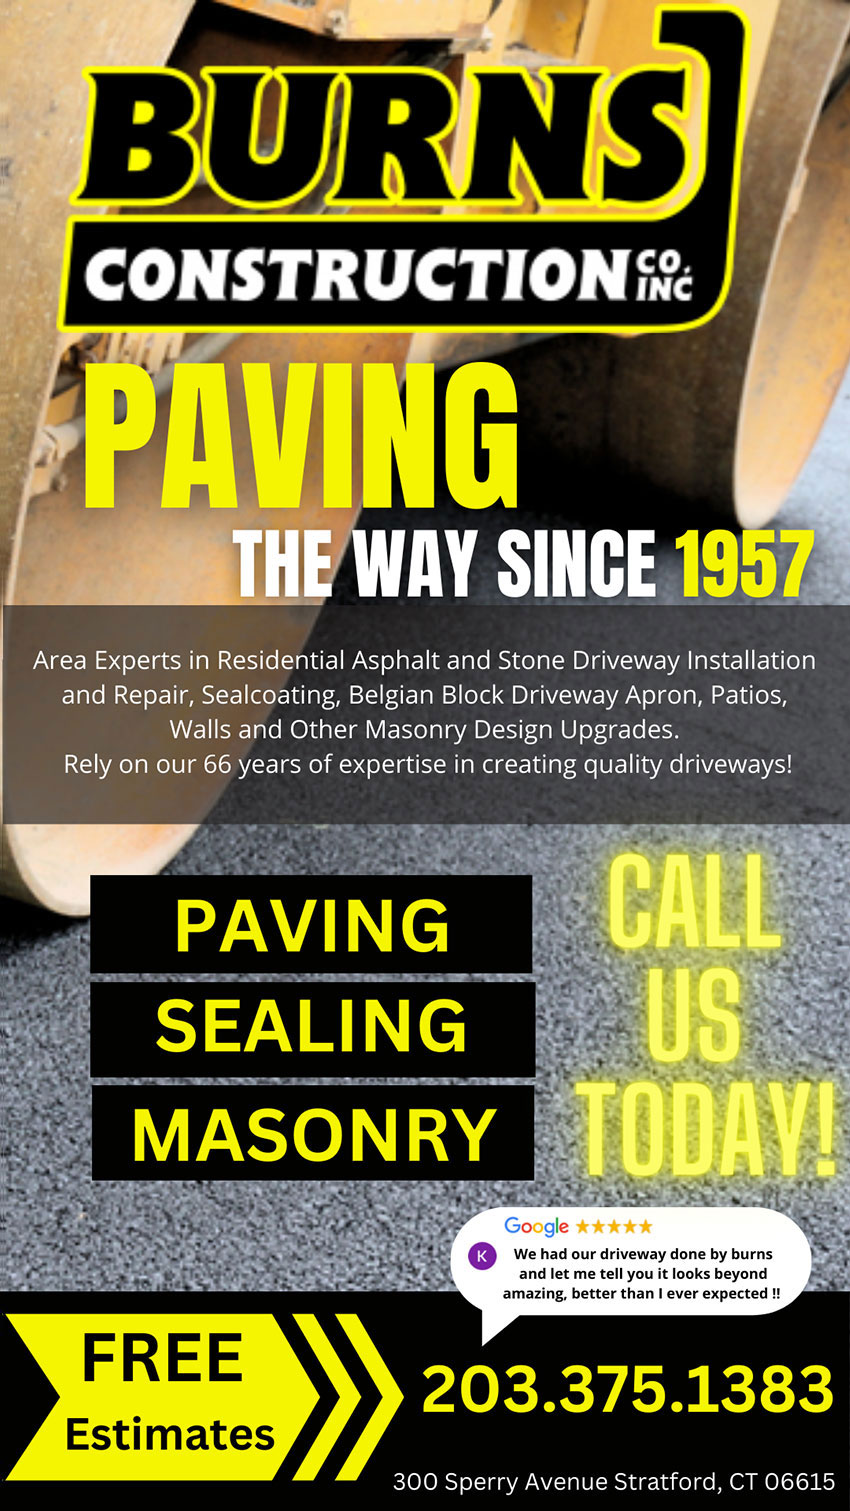 Burns Construction Paving the way since 1957. Paving, Sealing, Masonry